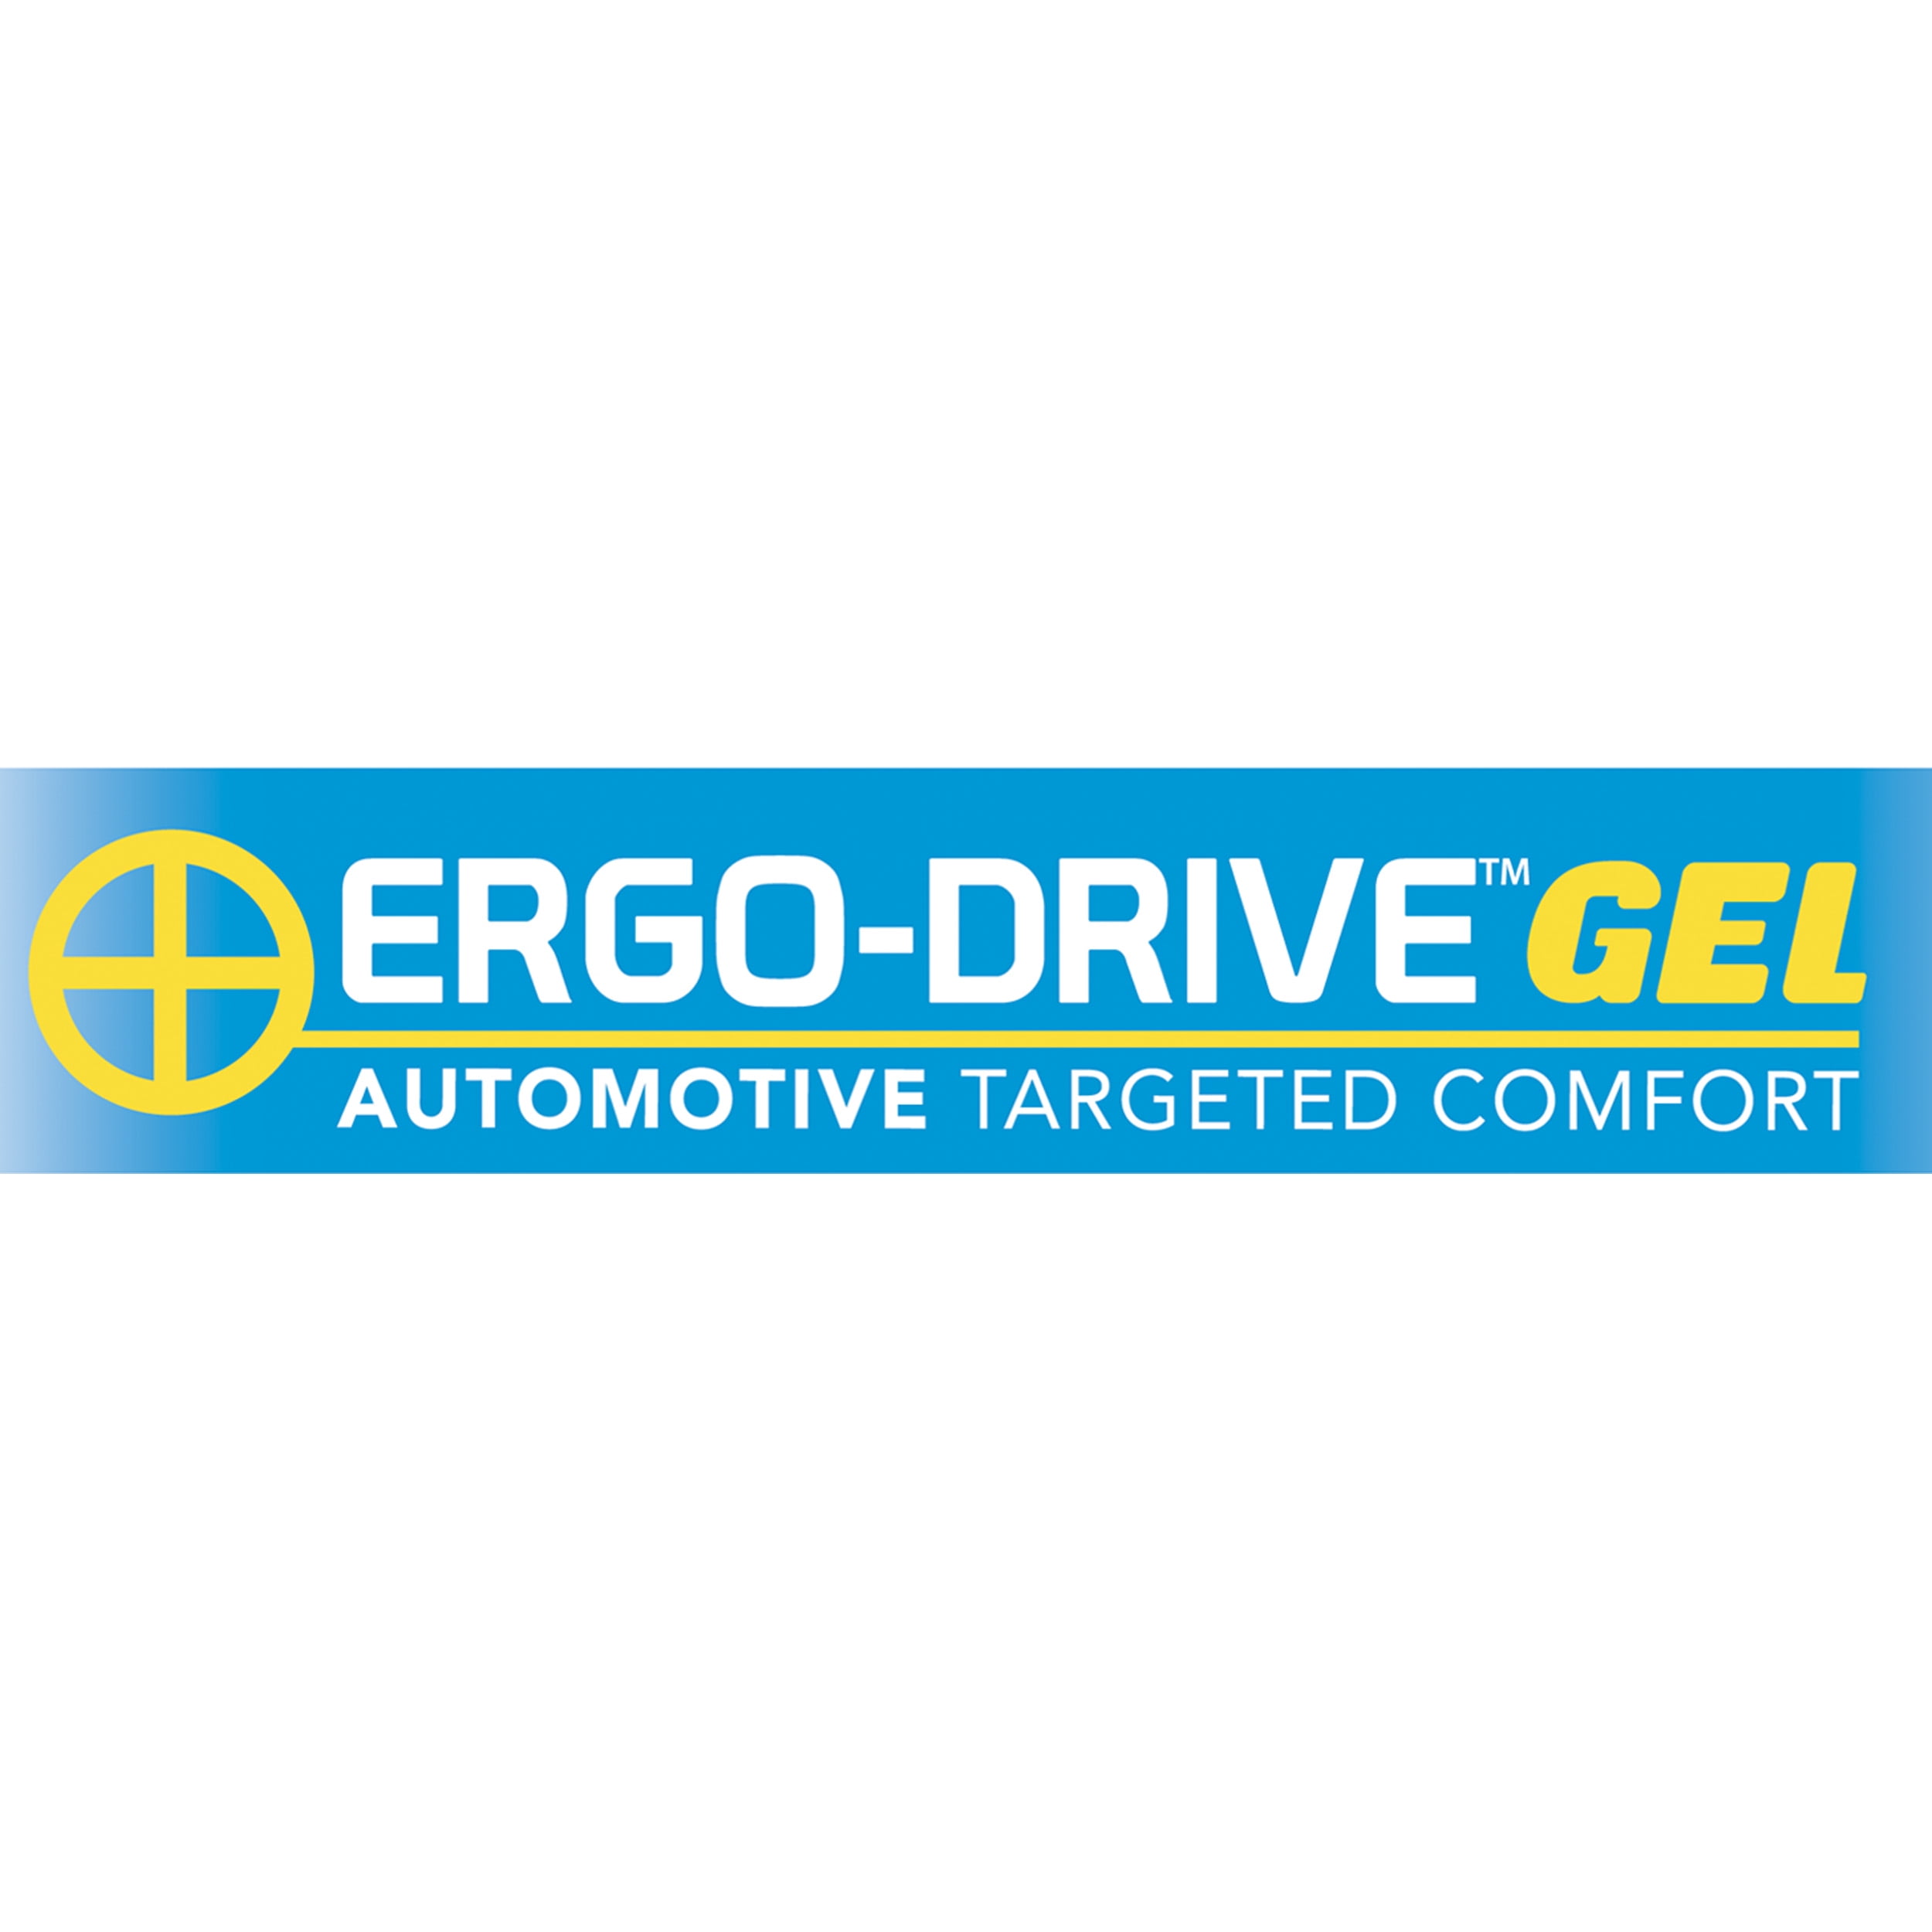 Ergo Drive 40299 Gel Posterior Cushion